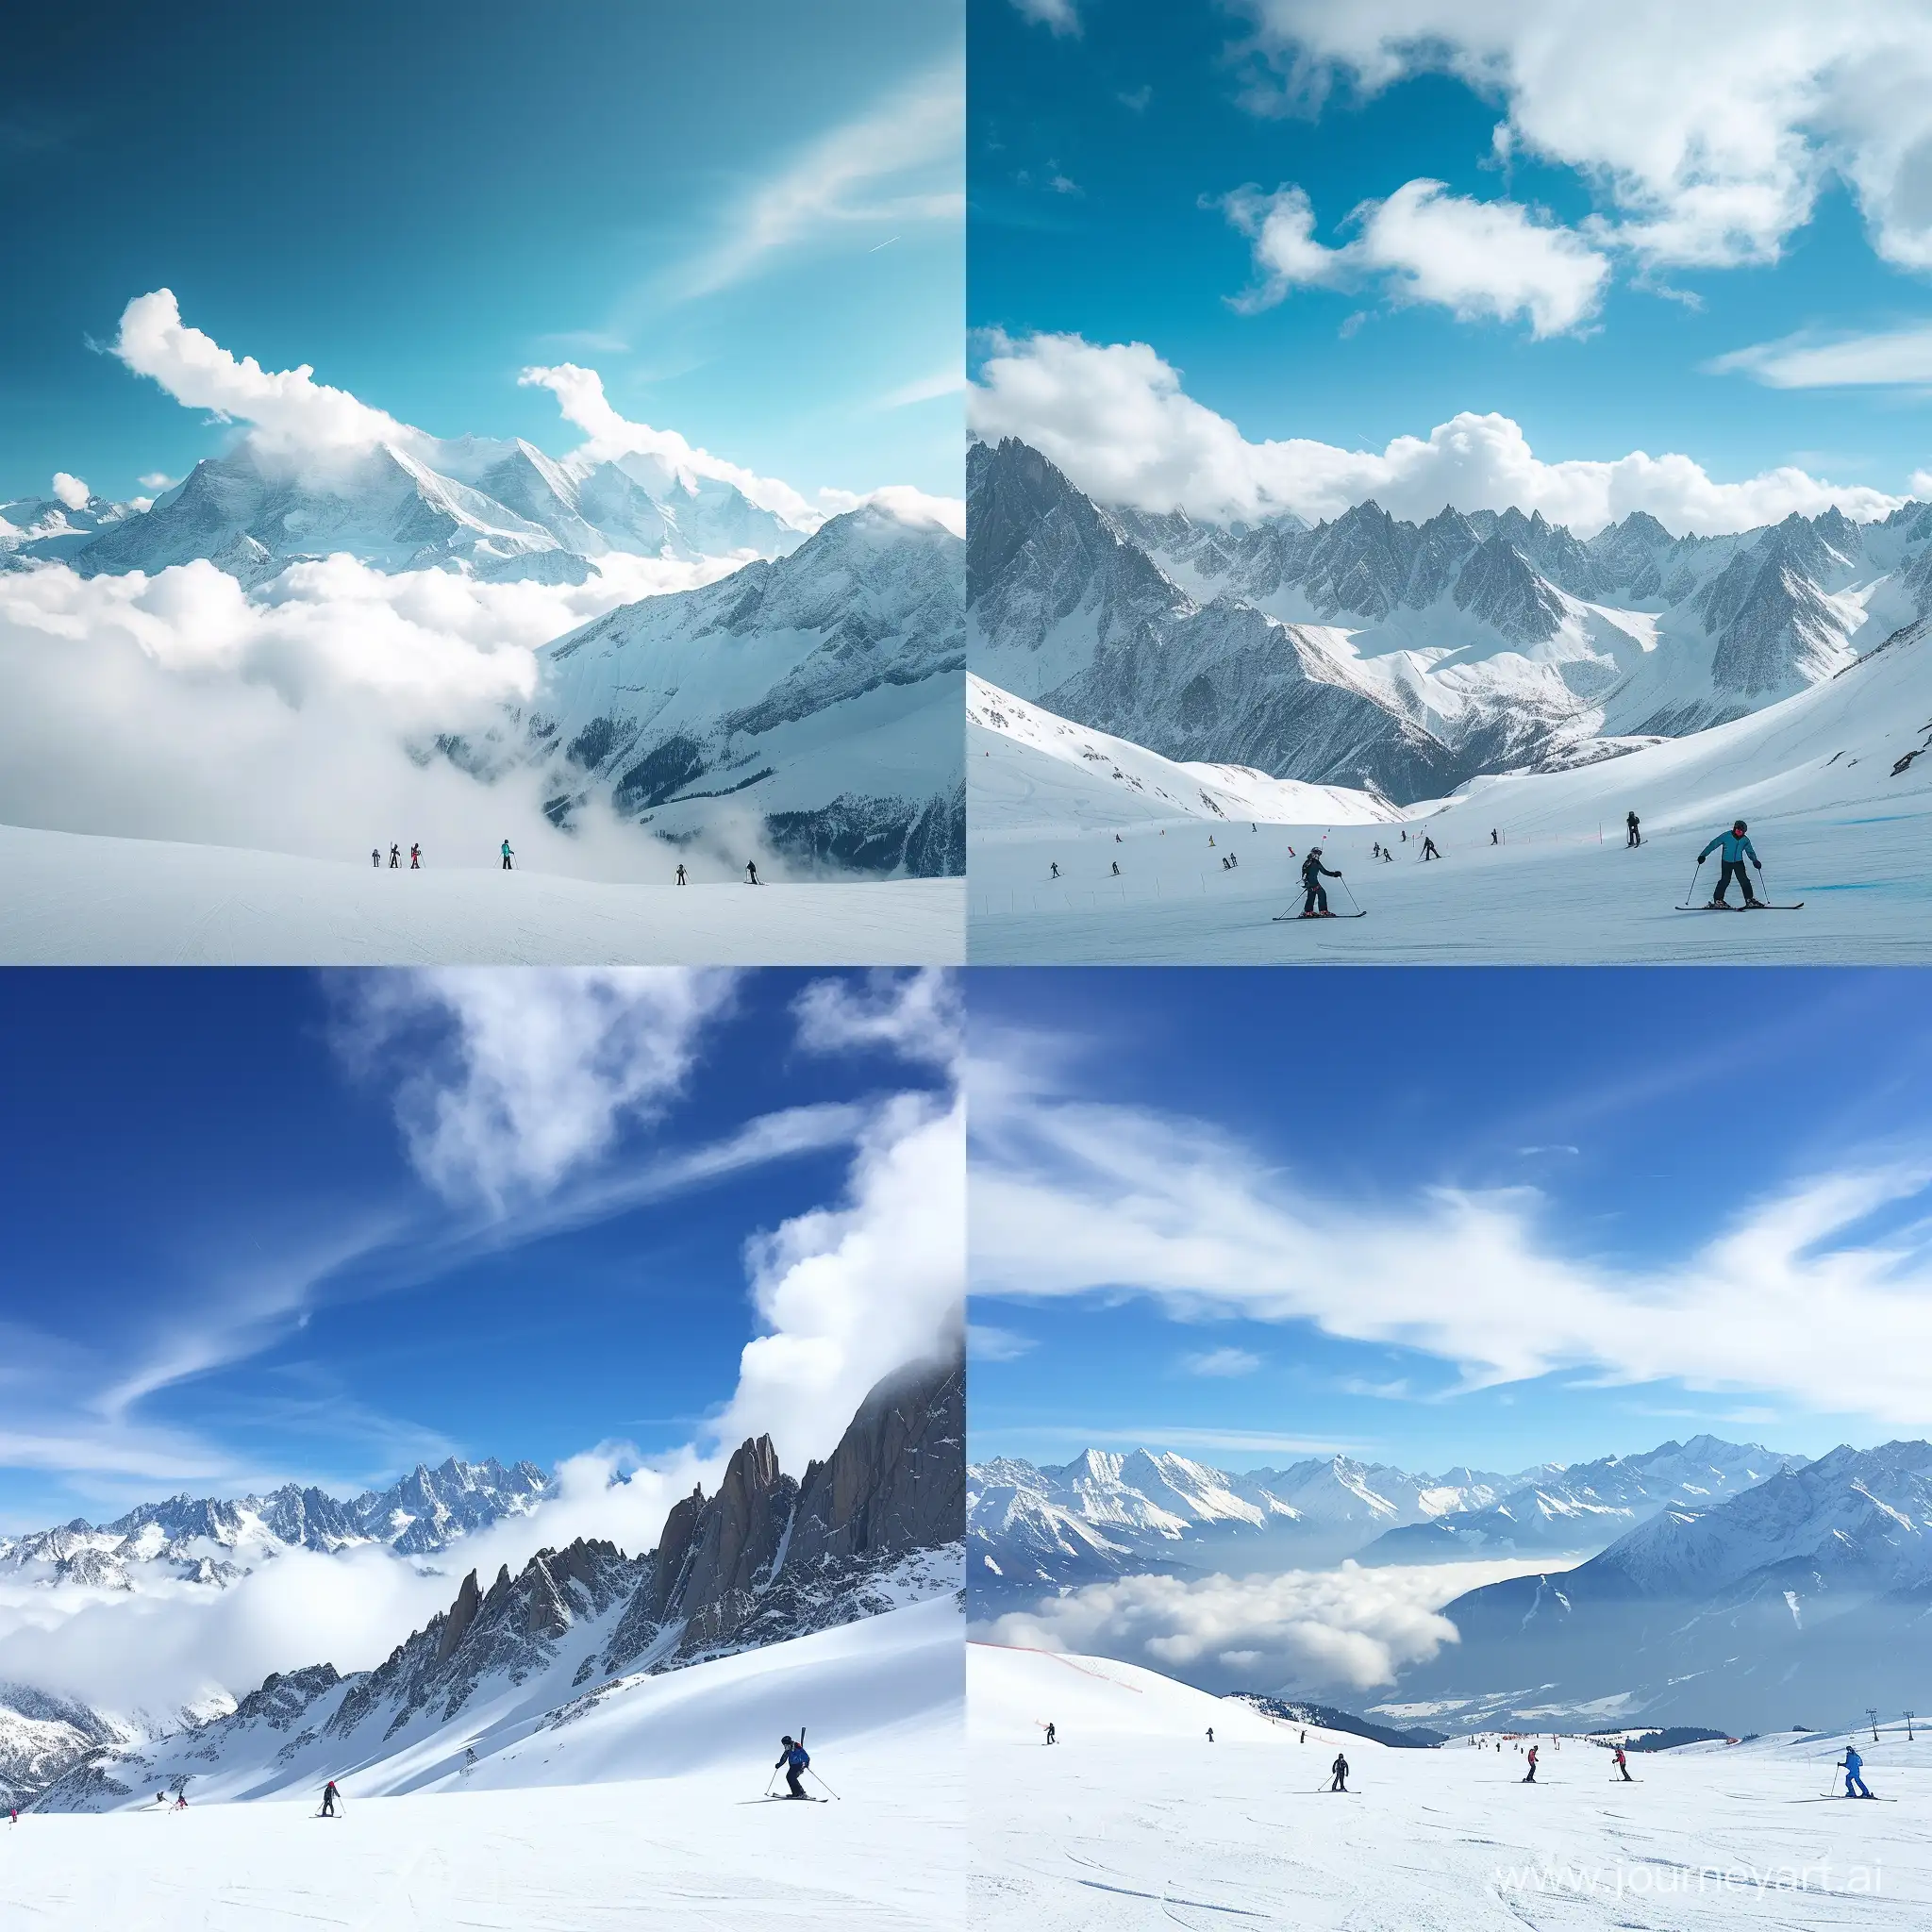 Panoramic-Alpine-Skiing-with-Blue-Skies-and-Snowy-Peaks